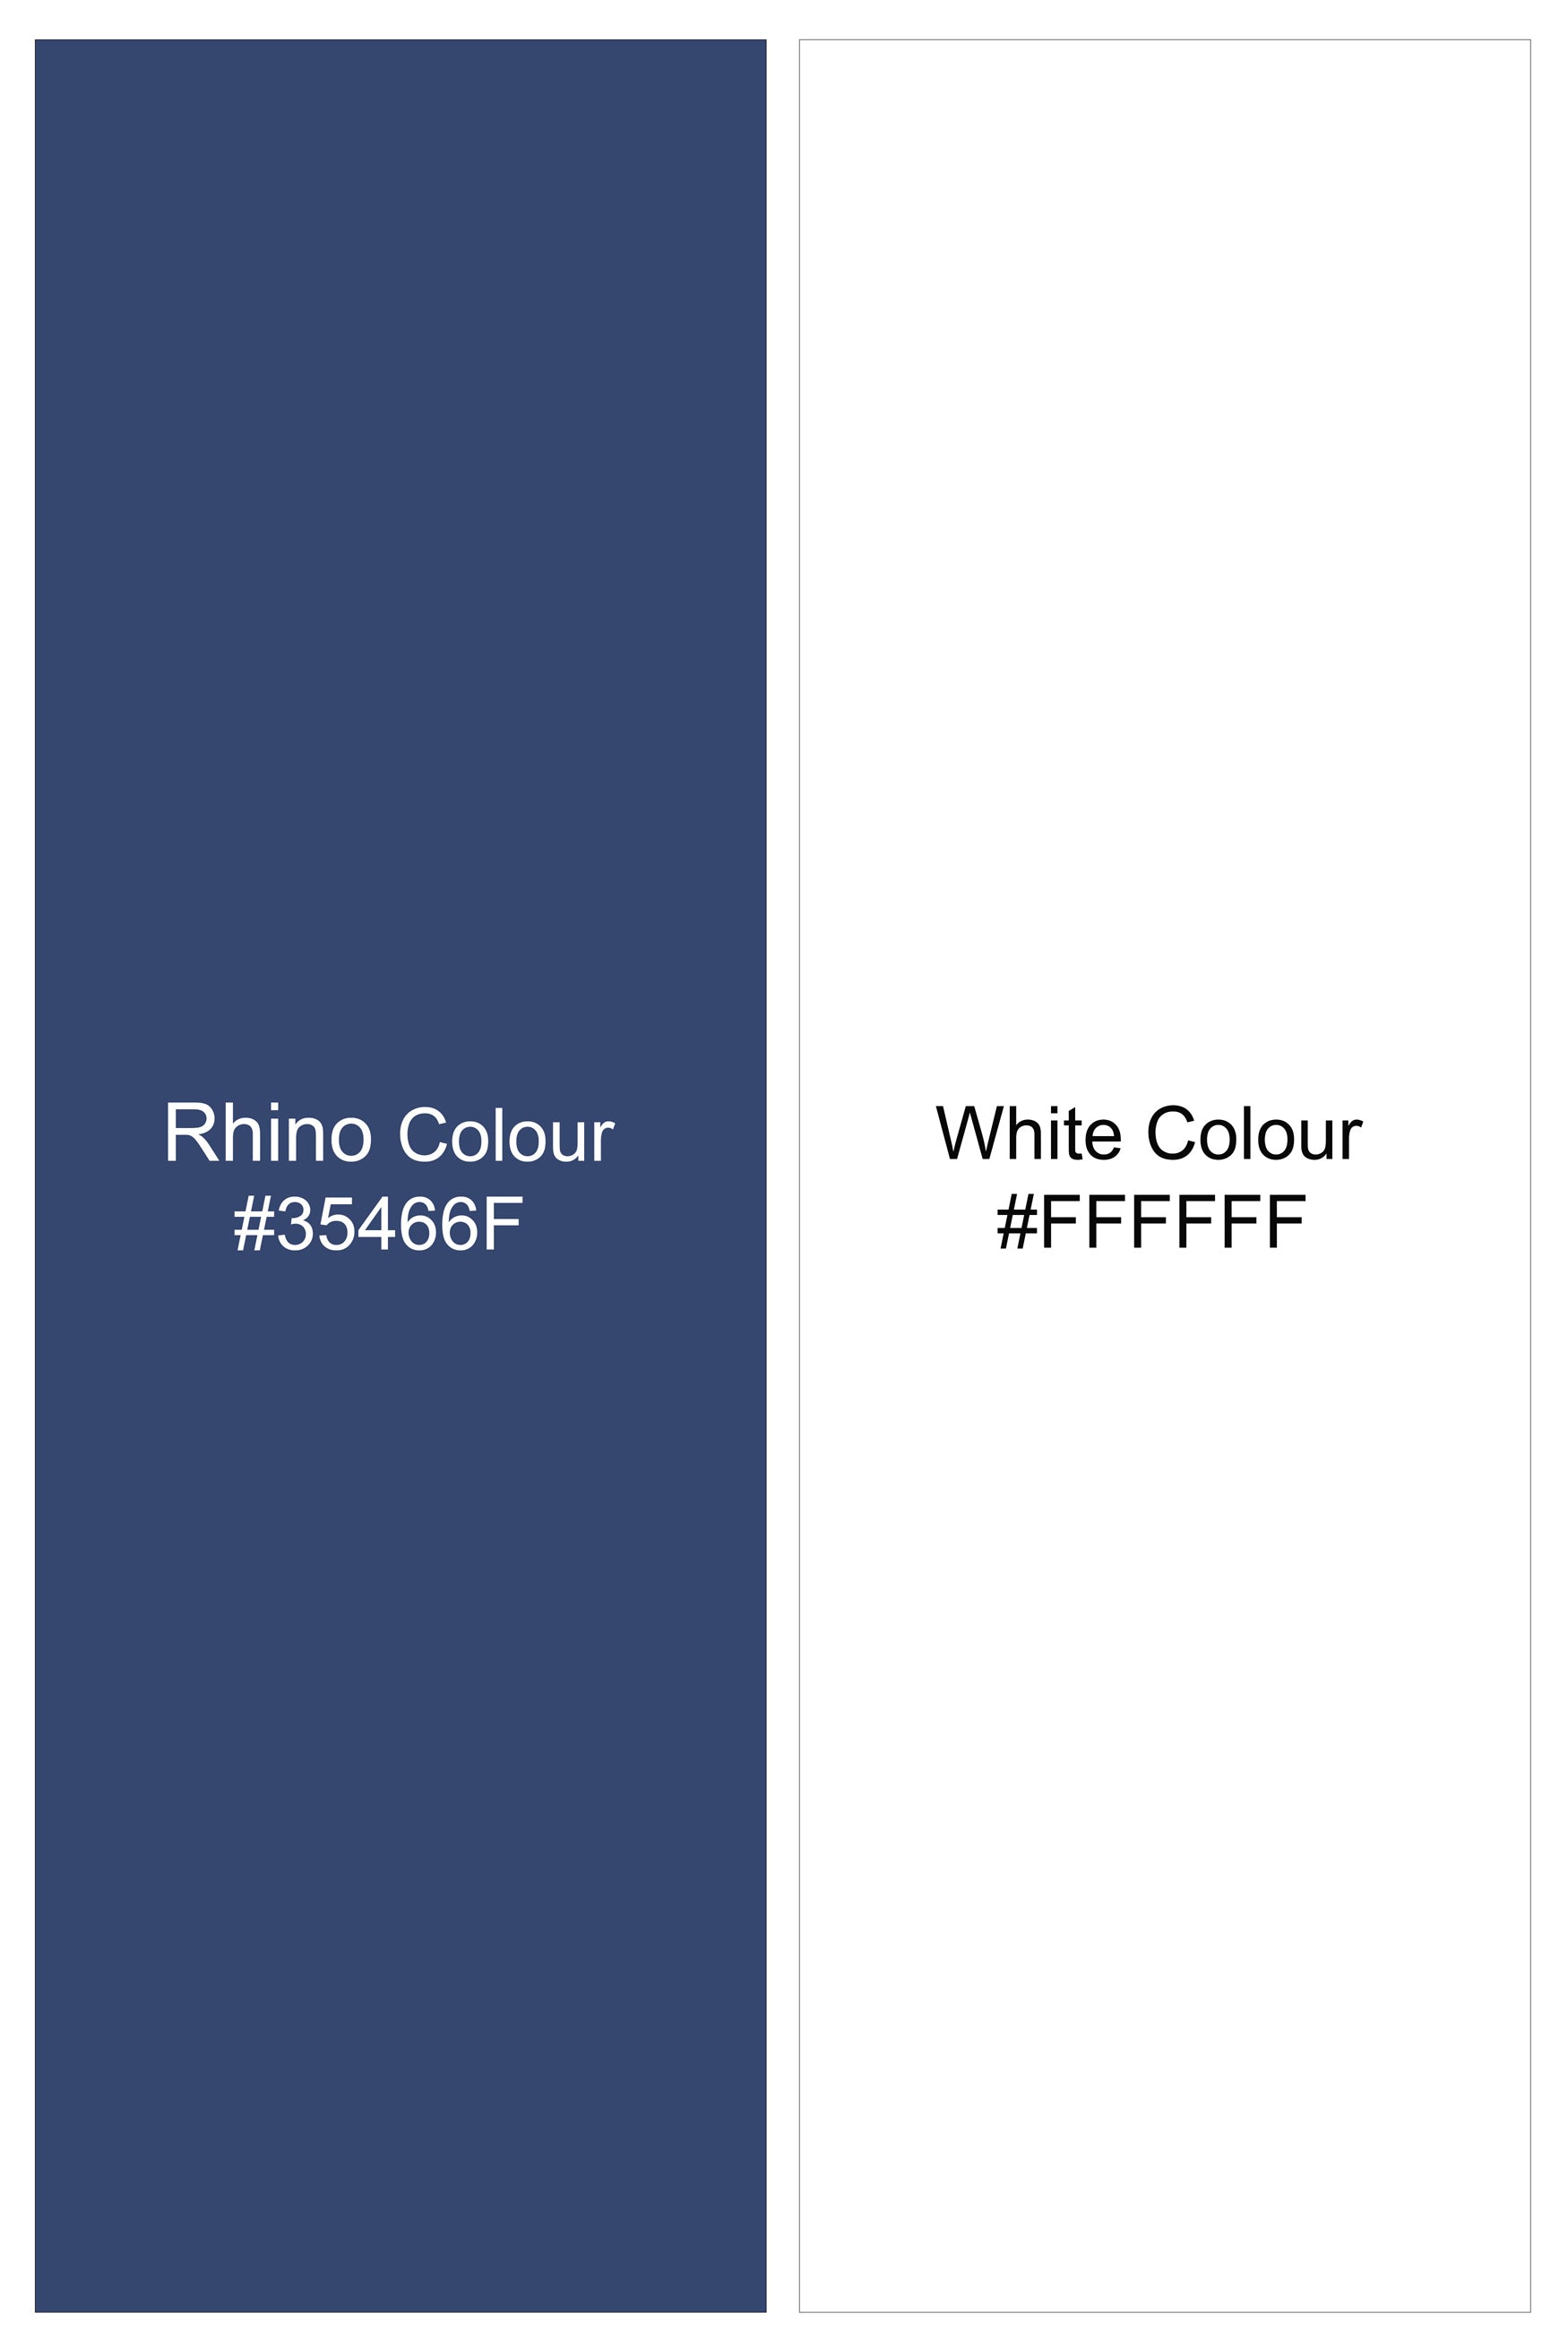 Rhino Blue and White Micro Striped Dobby Shirt